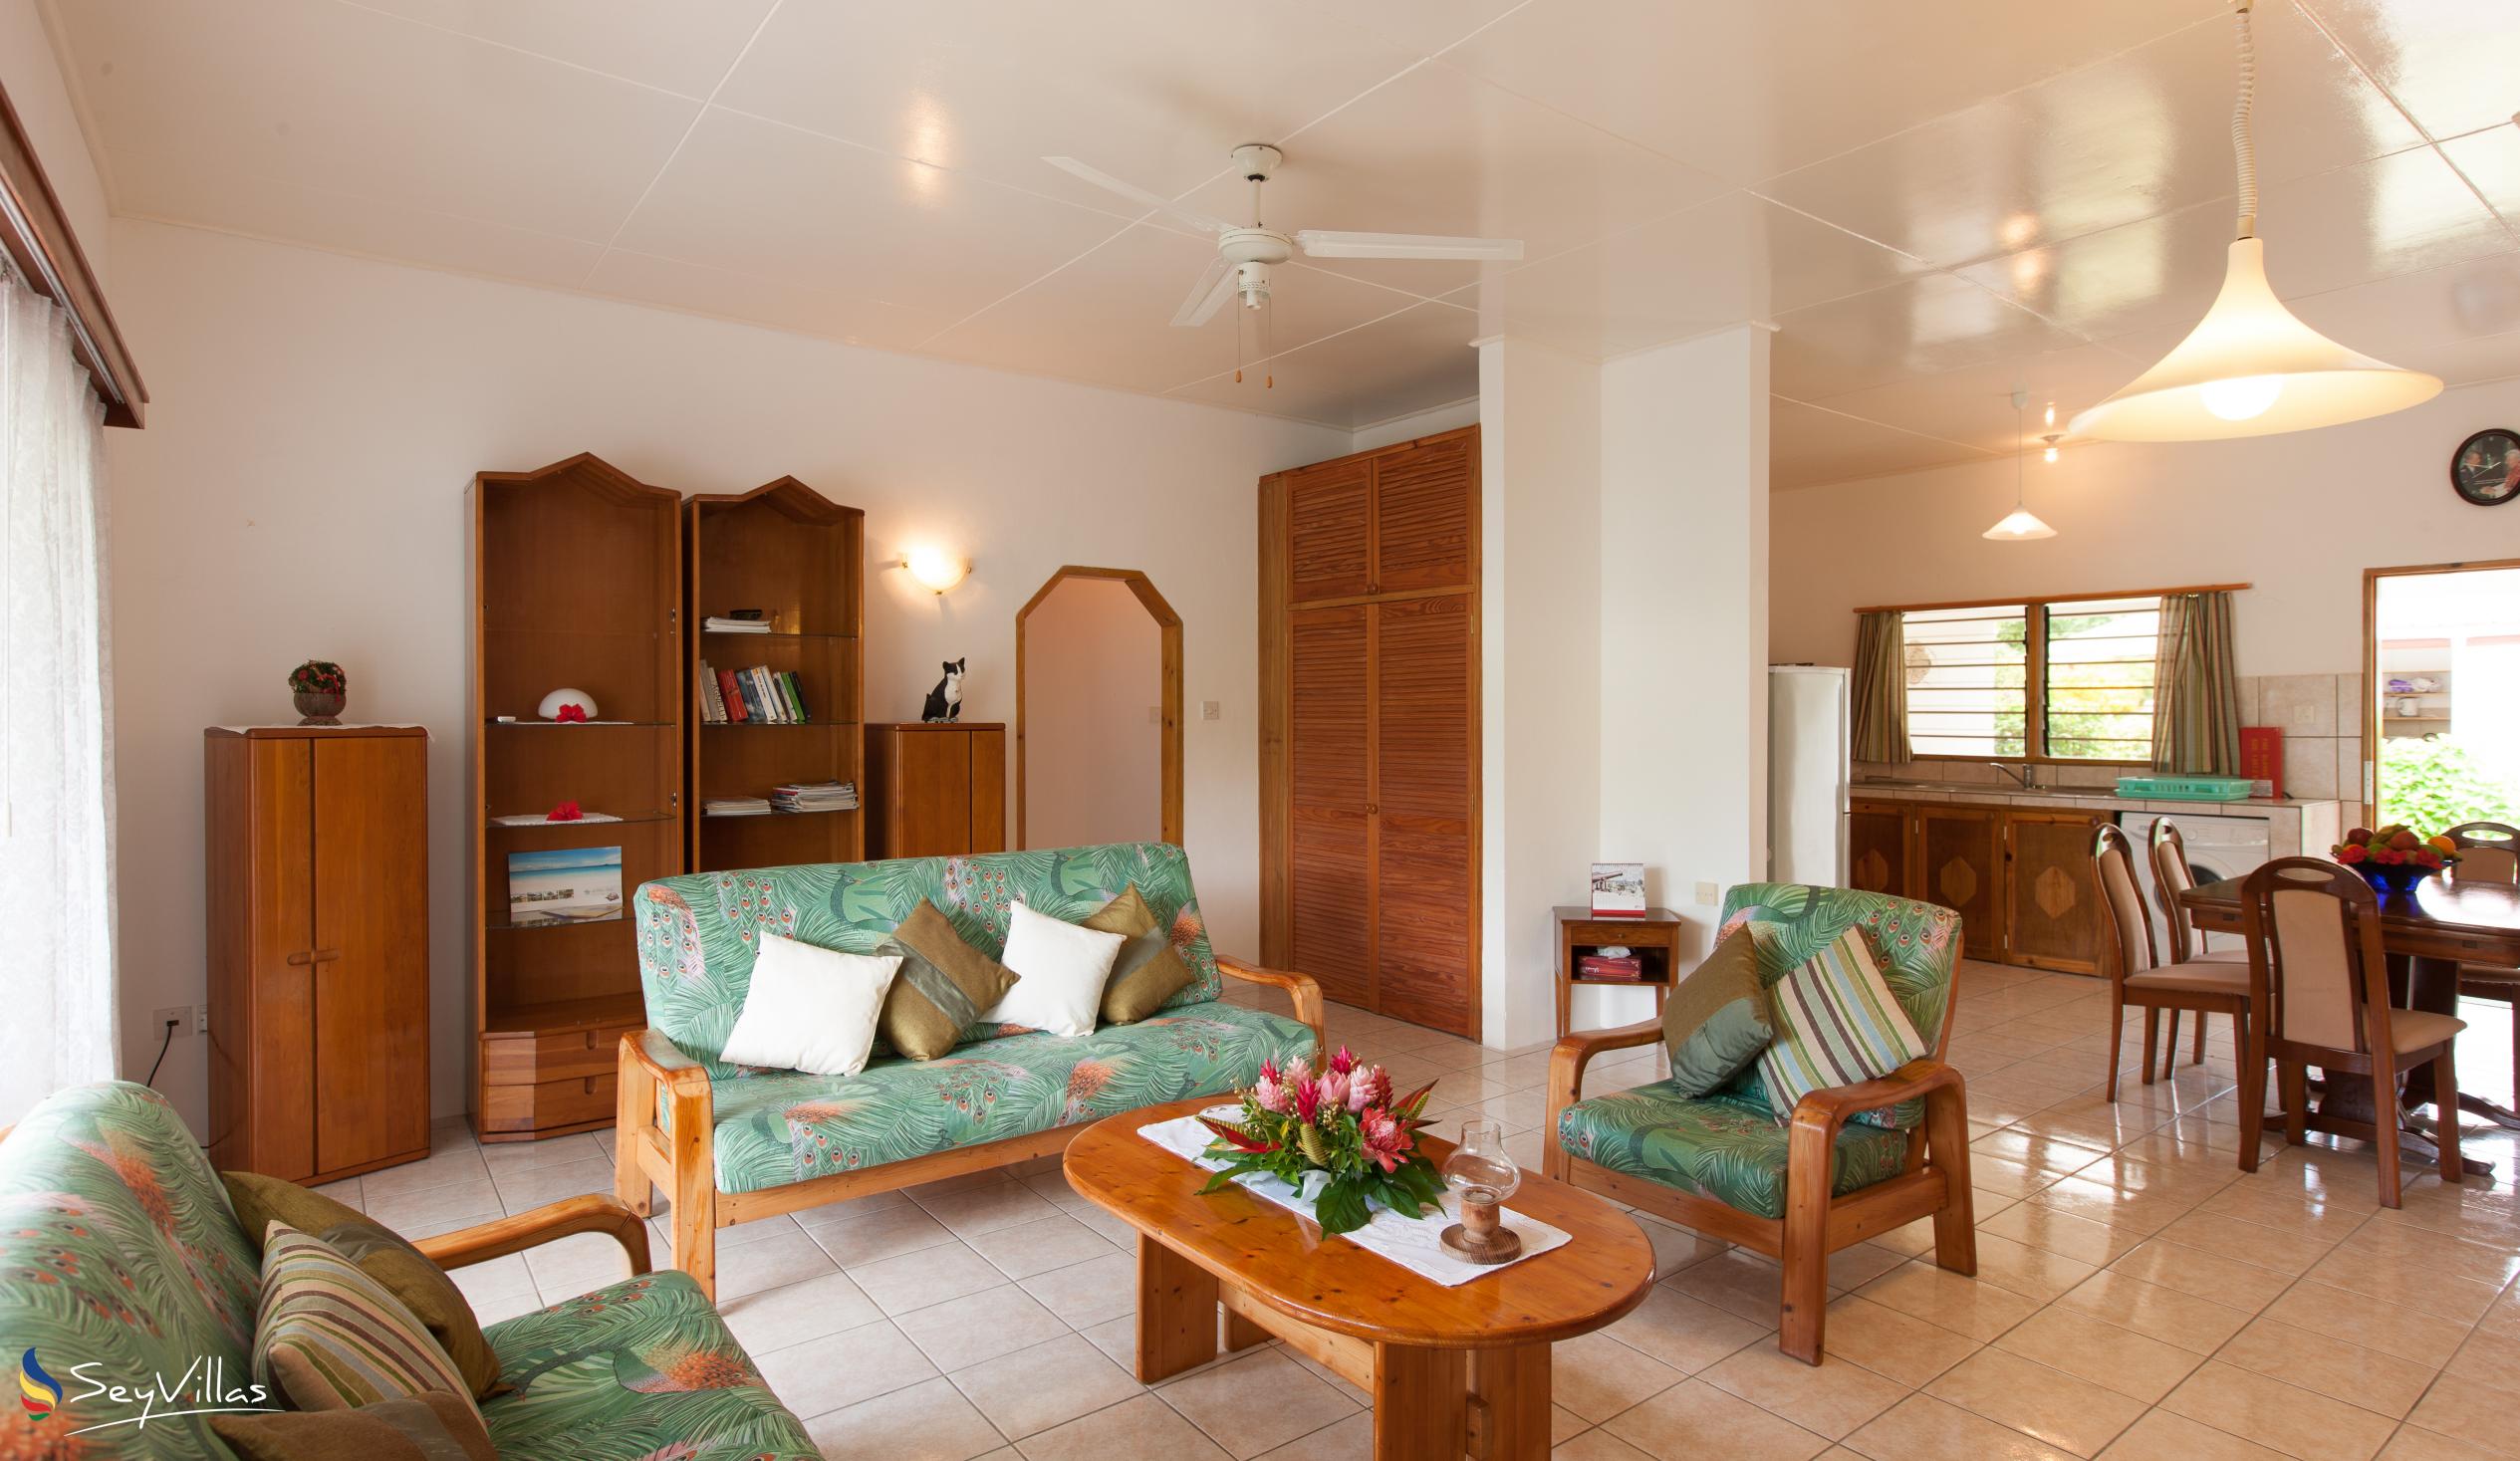 Foto 43: Le Relax St. Joseph Guest House - Camera Familiare - Praslin (Seychelles)